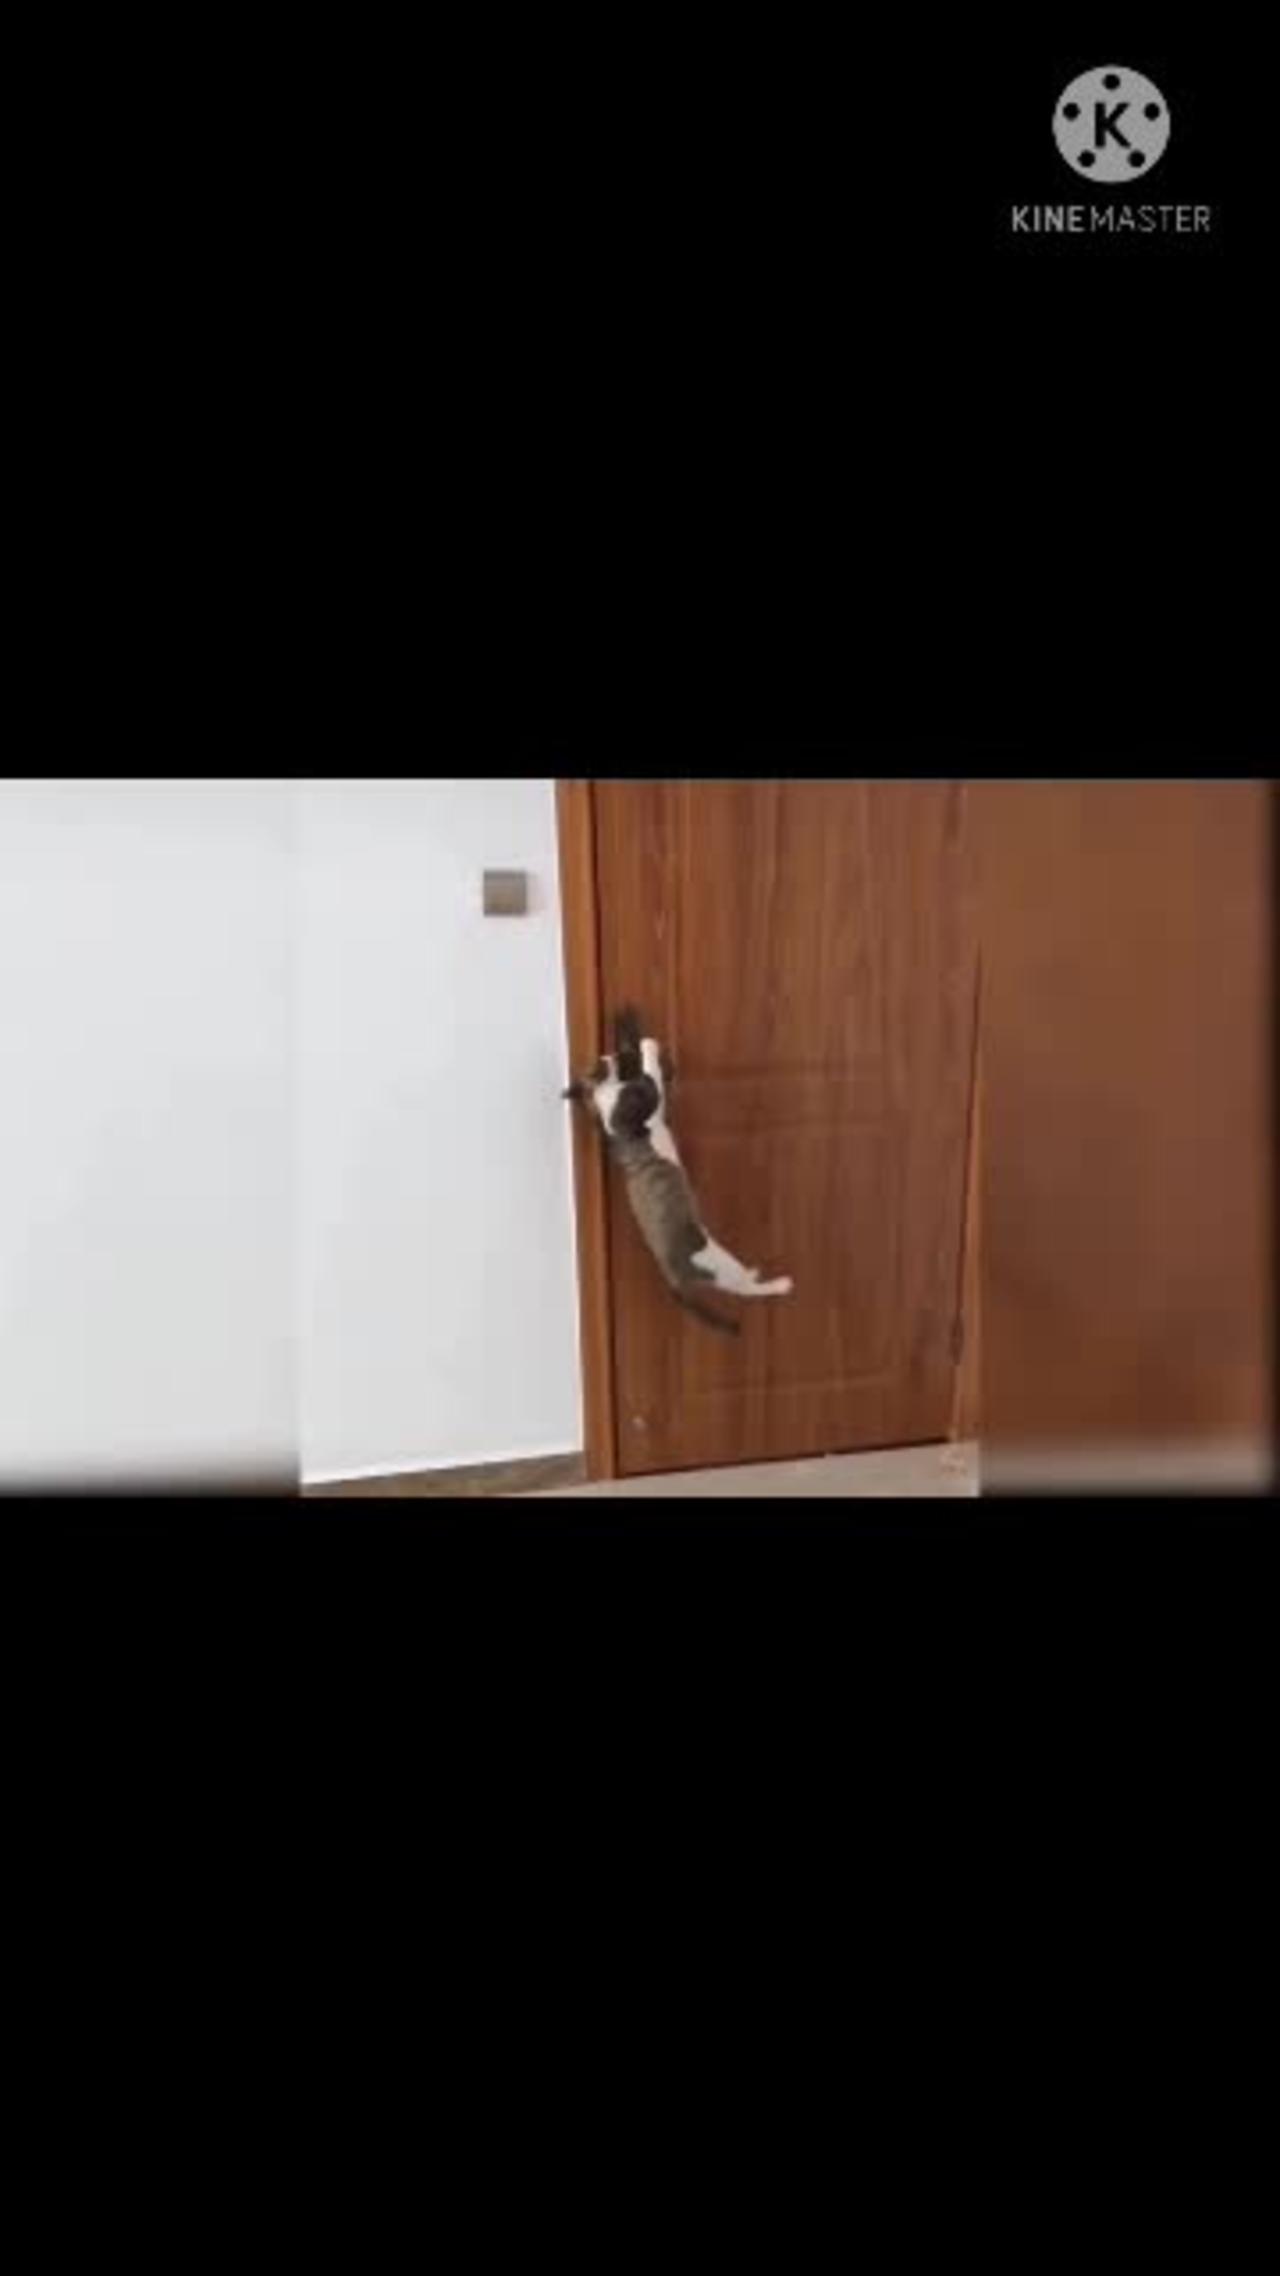 Cute cats funny videos, comedy videos